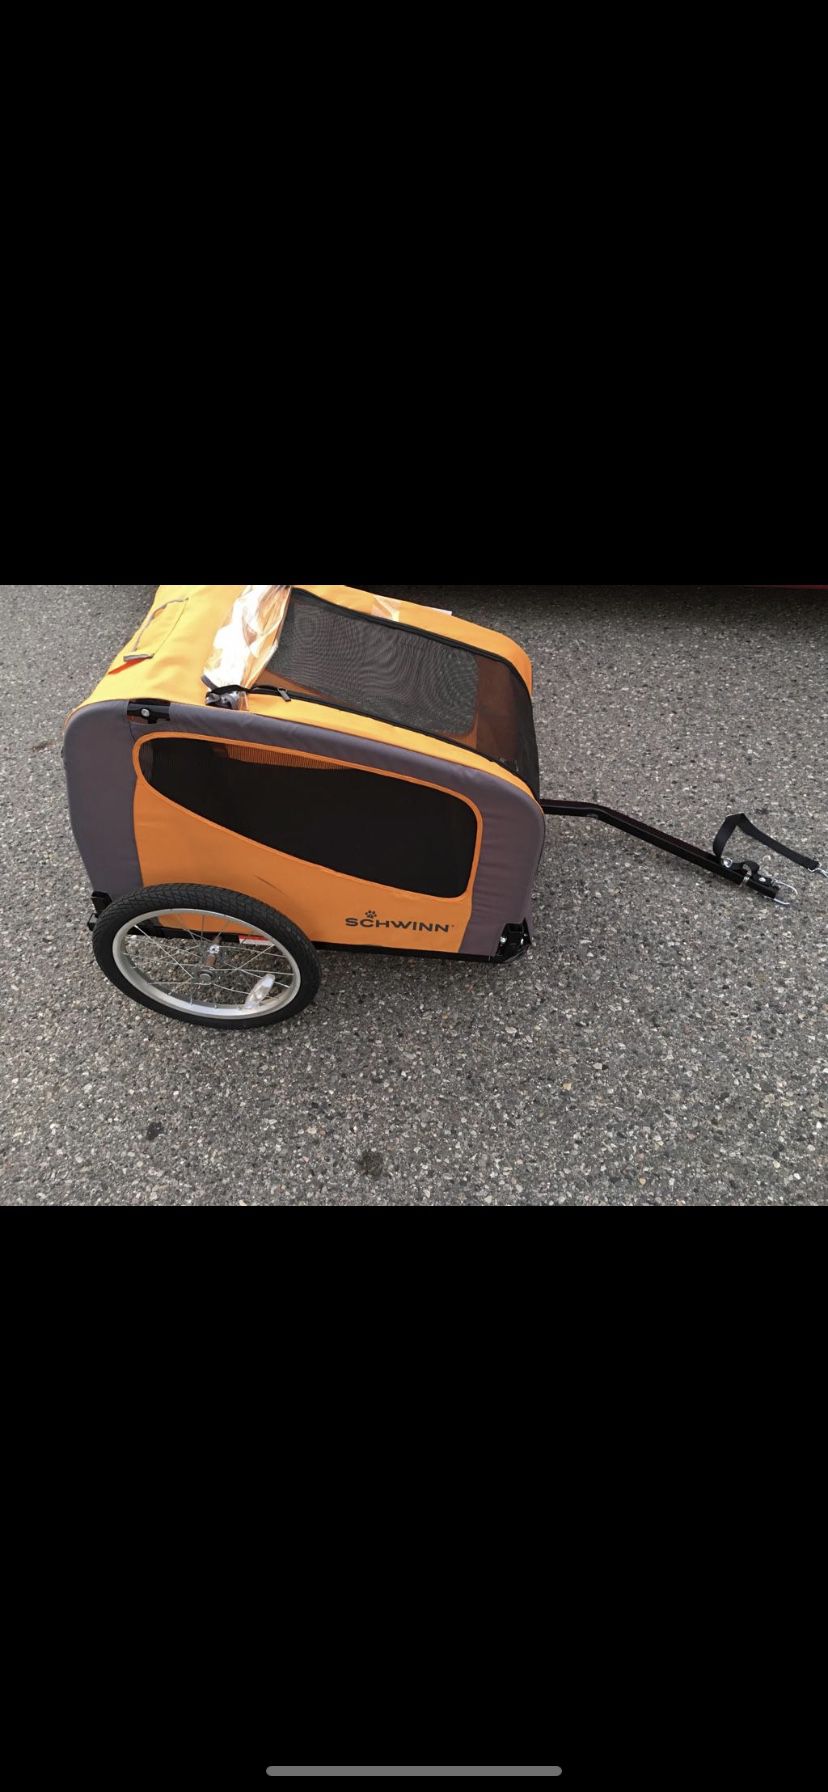 Trailblazer bike trailer for pets